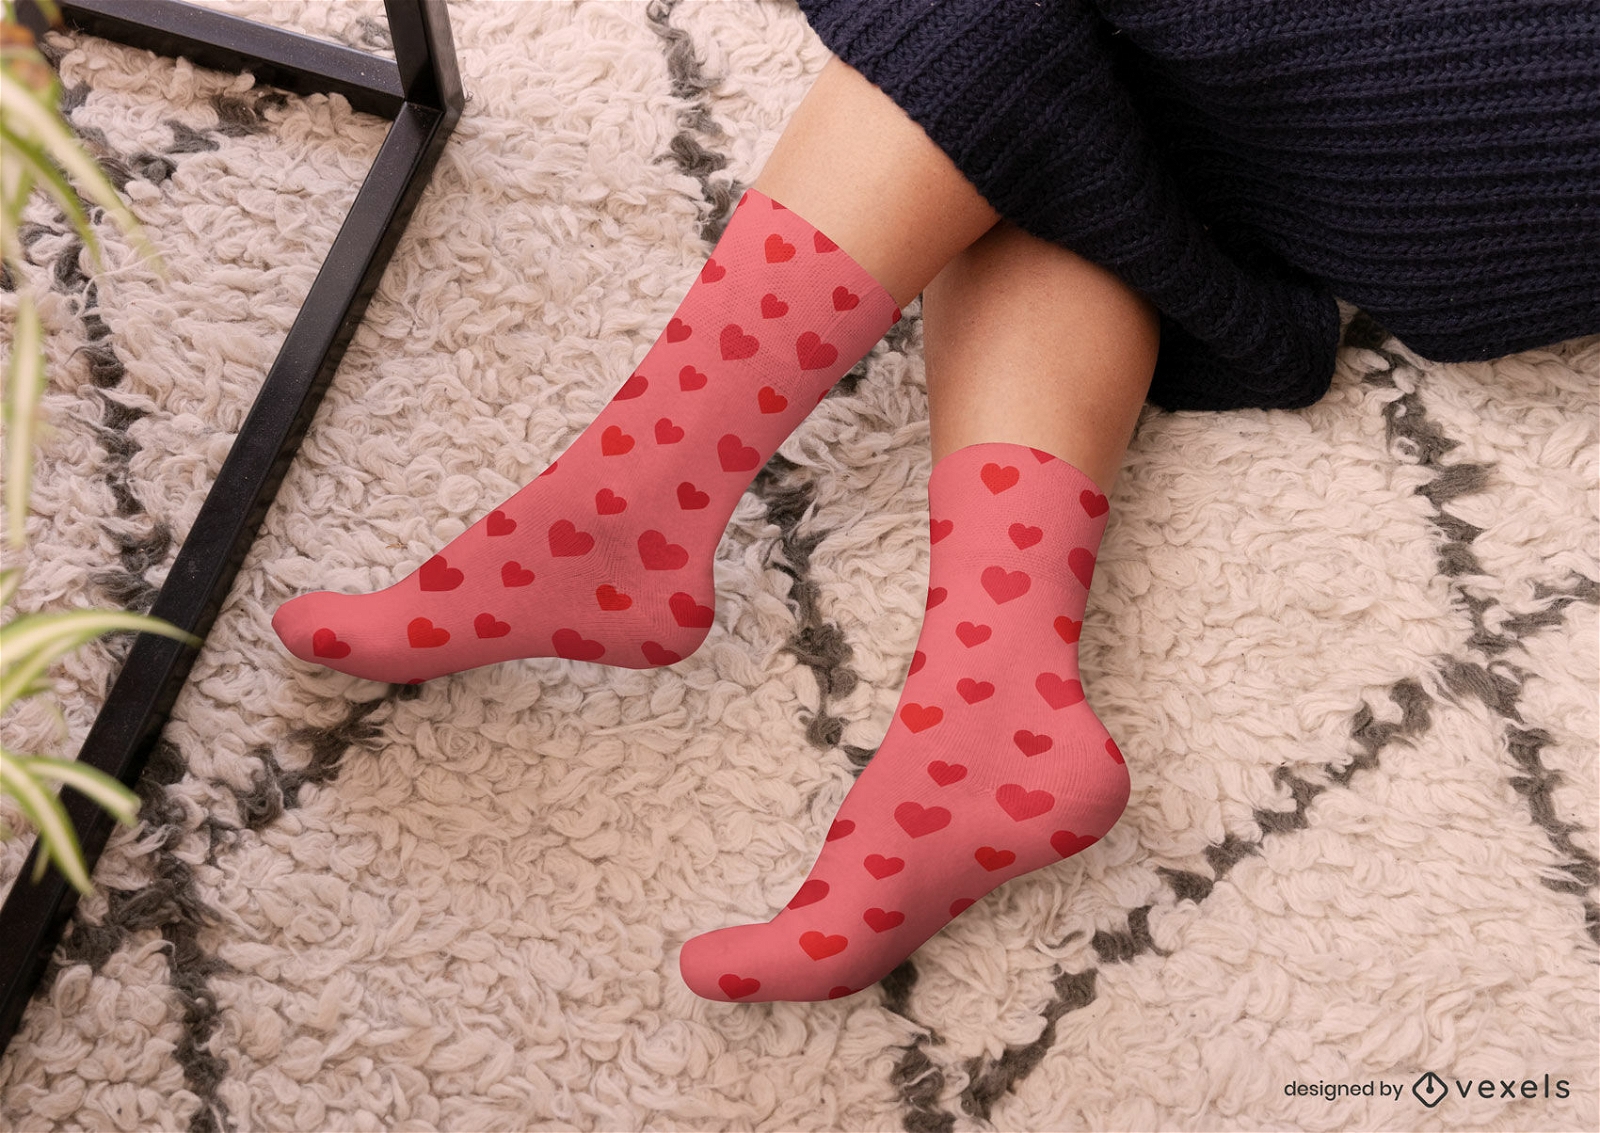 Valentines day socks on feet in rug mockup